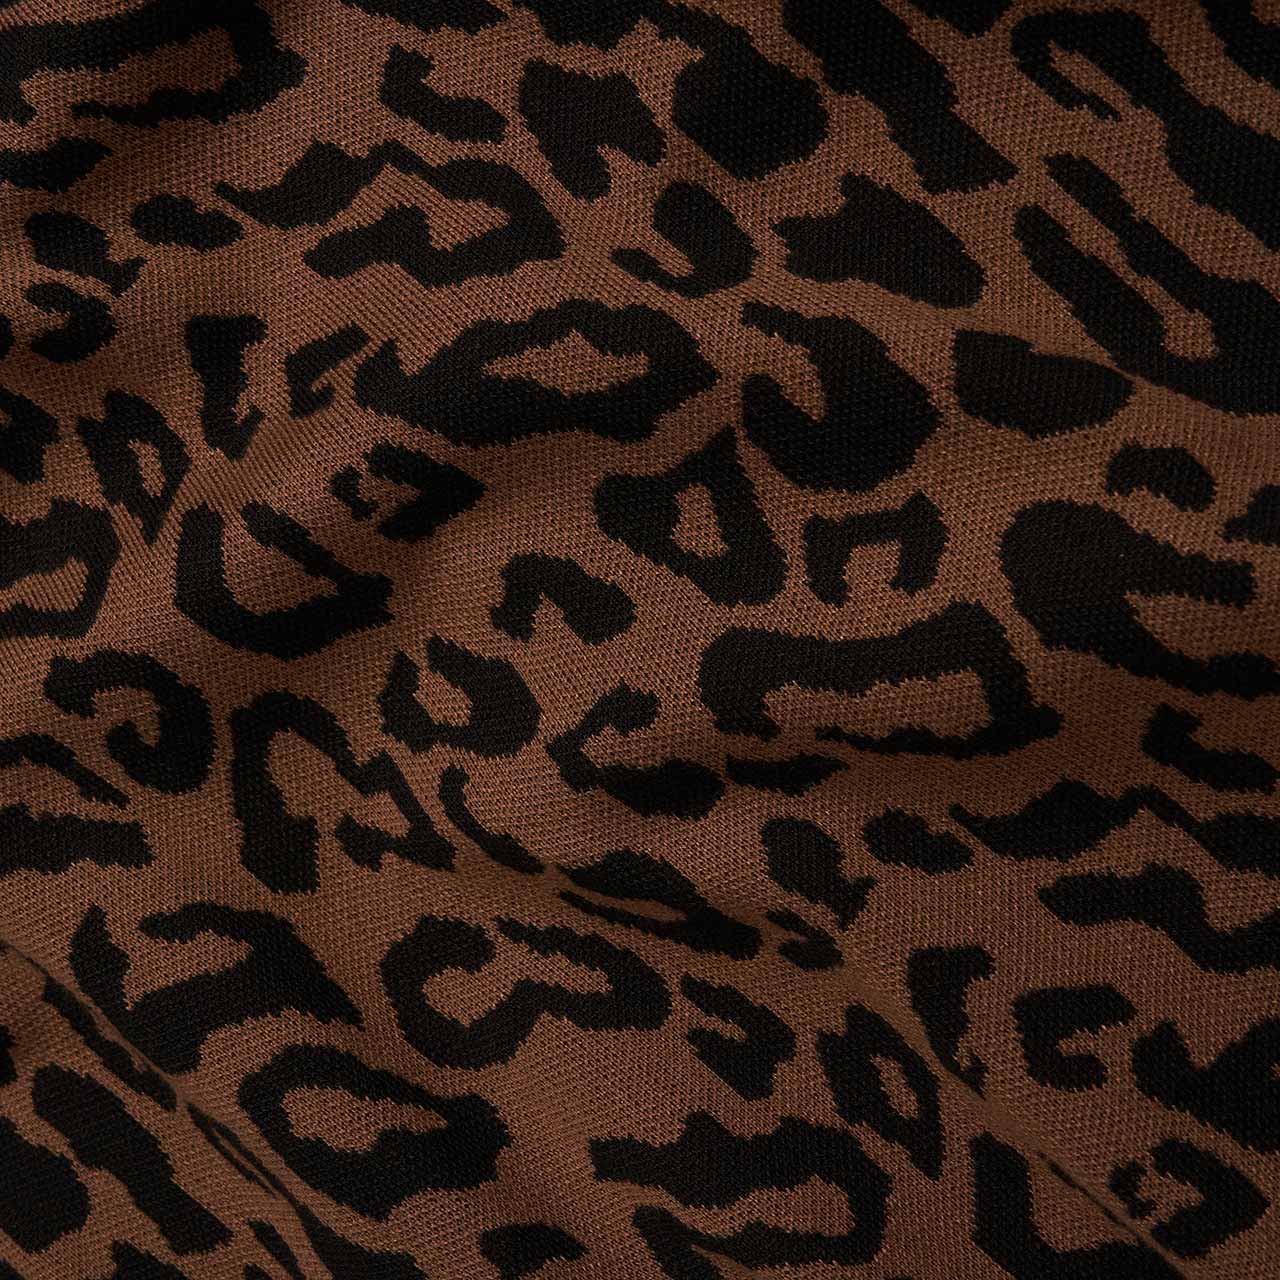 wacko maria wacko maria knitted polo shirt (leopard)